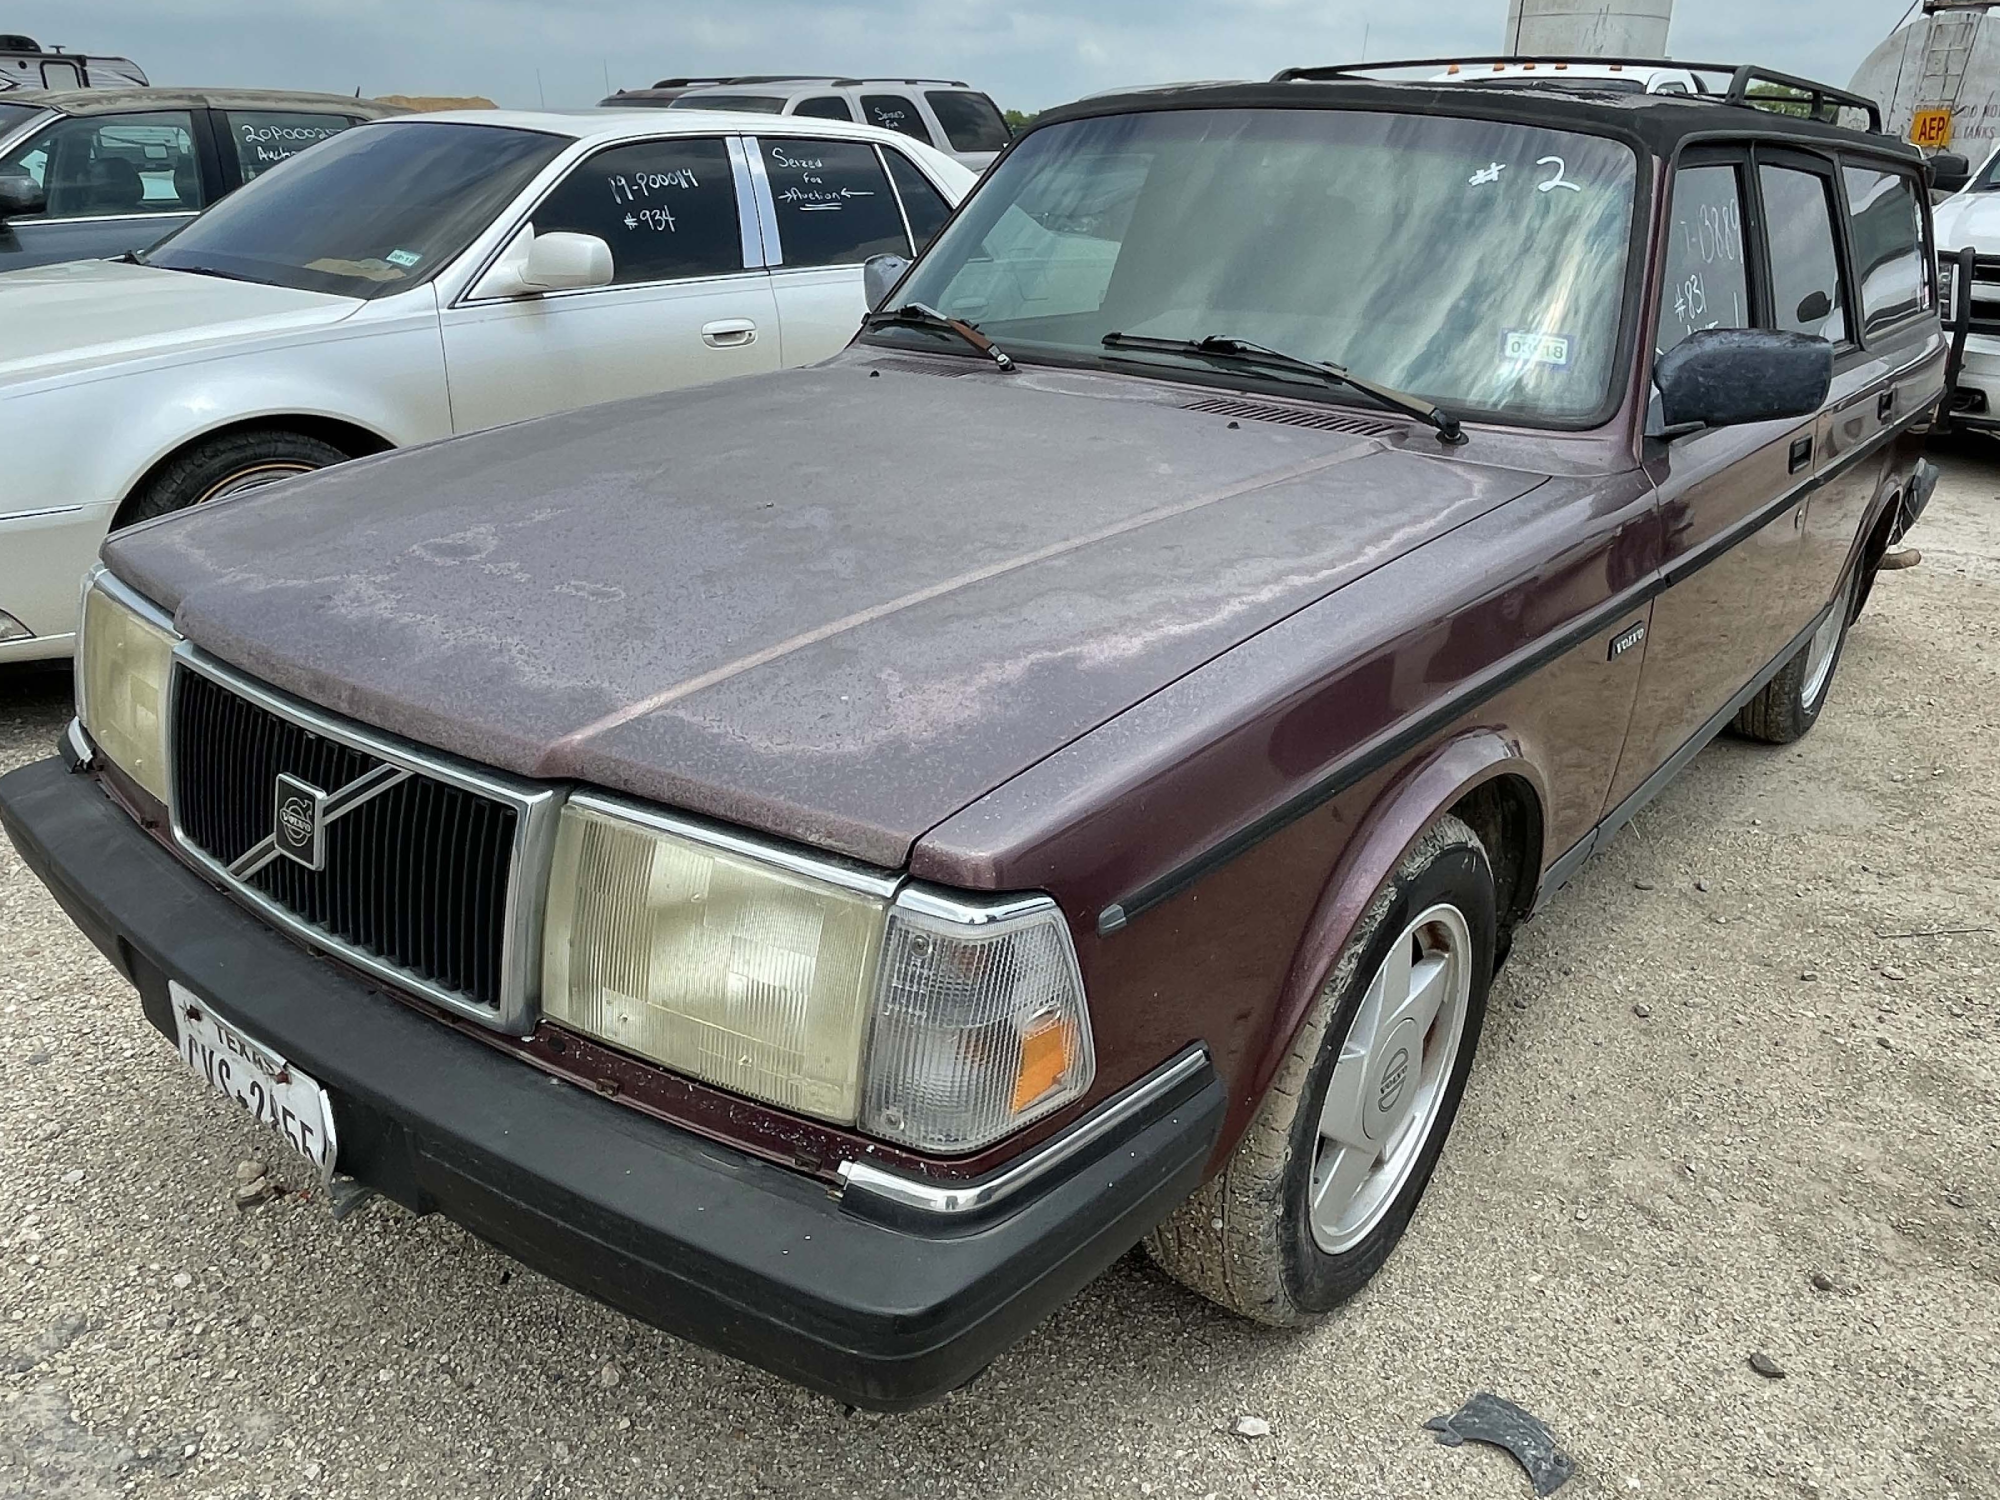 Brown Volvo Car